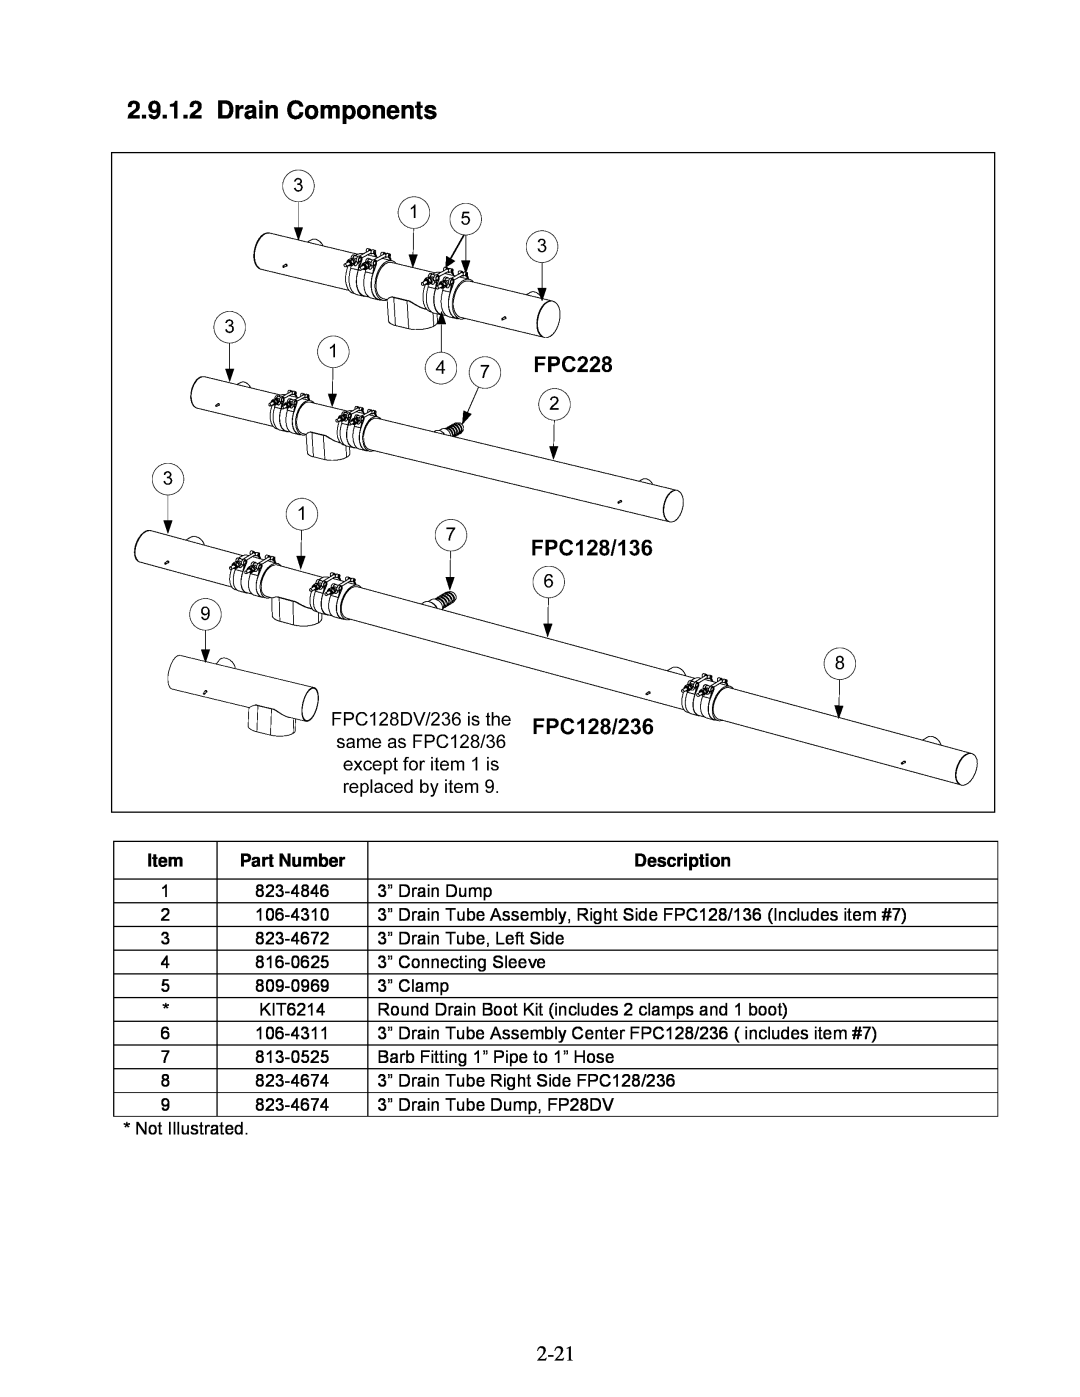 Frymaster 2836 manual Drain Components, Part Number, Description 